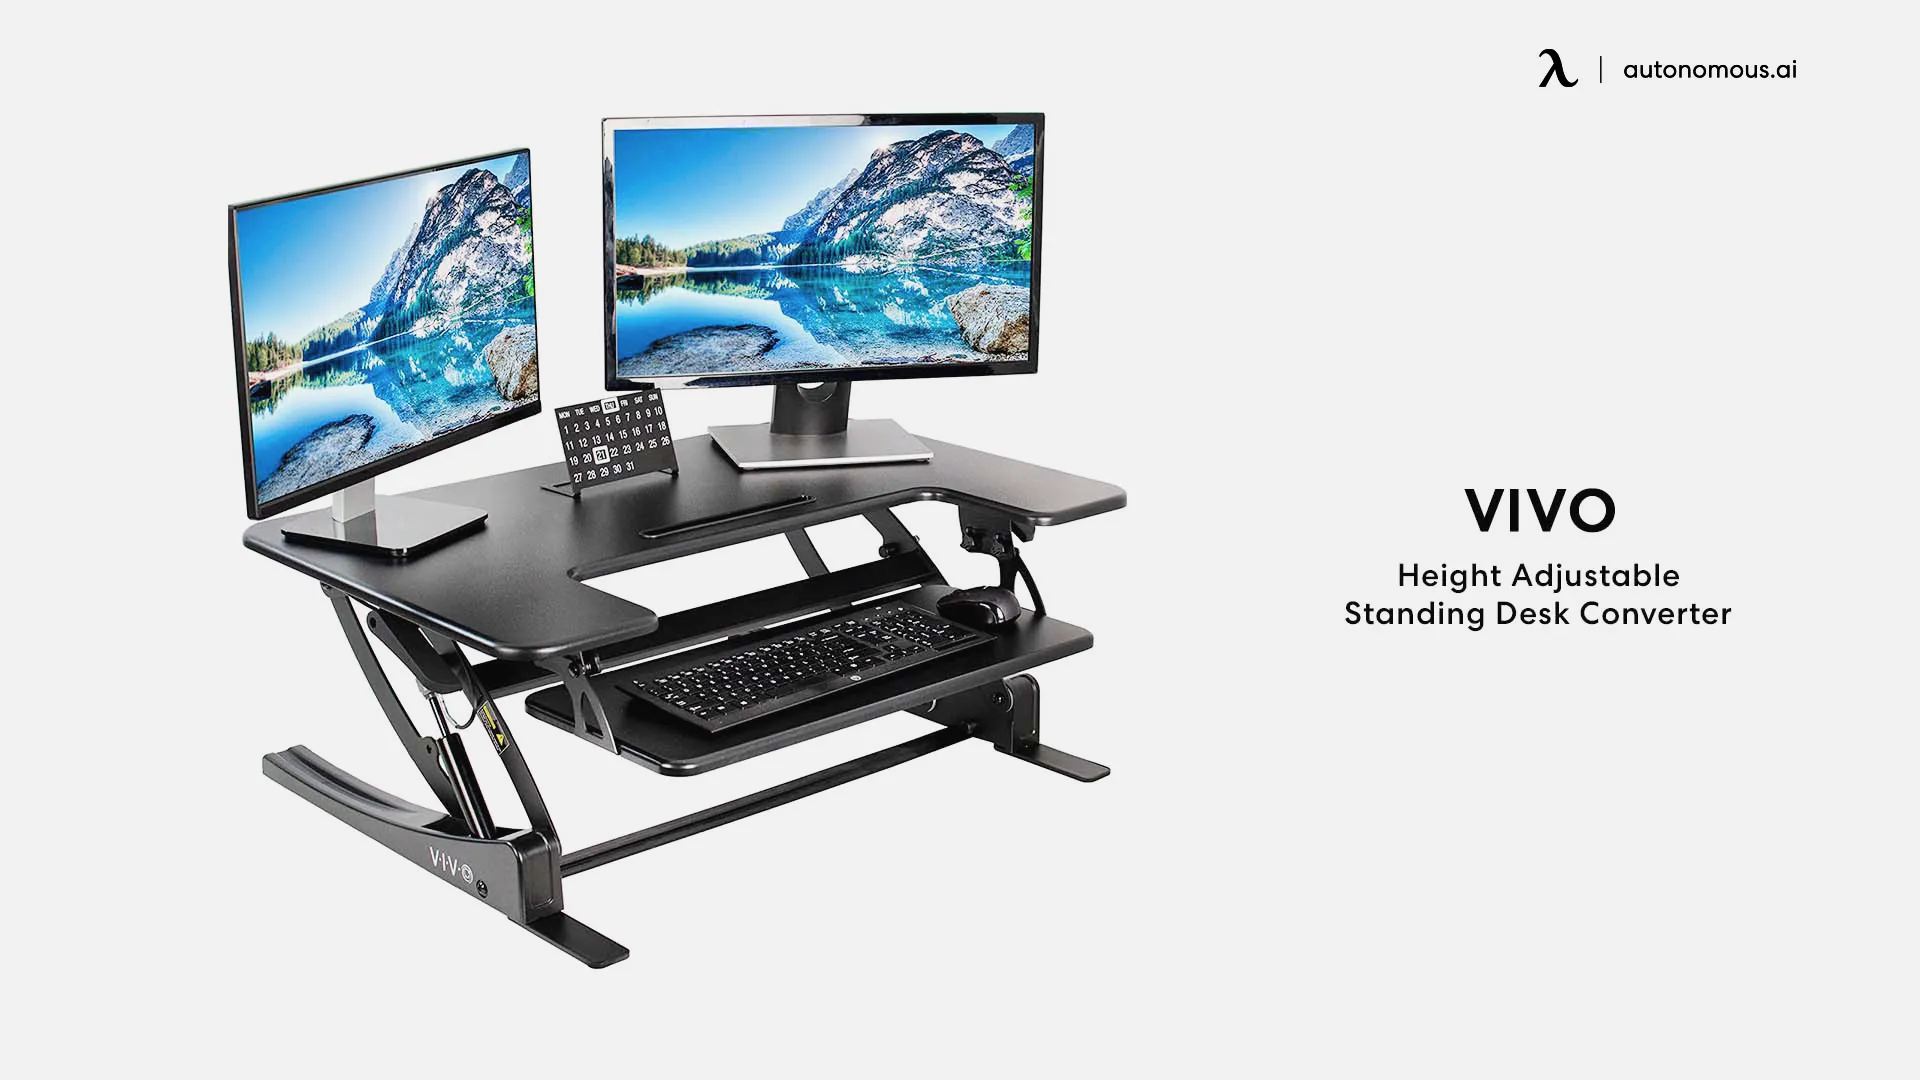 Standing Desk Converter by Vivo